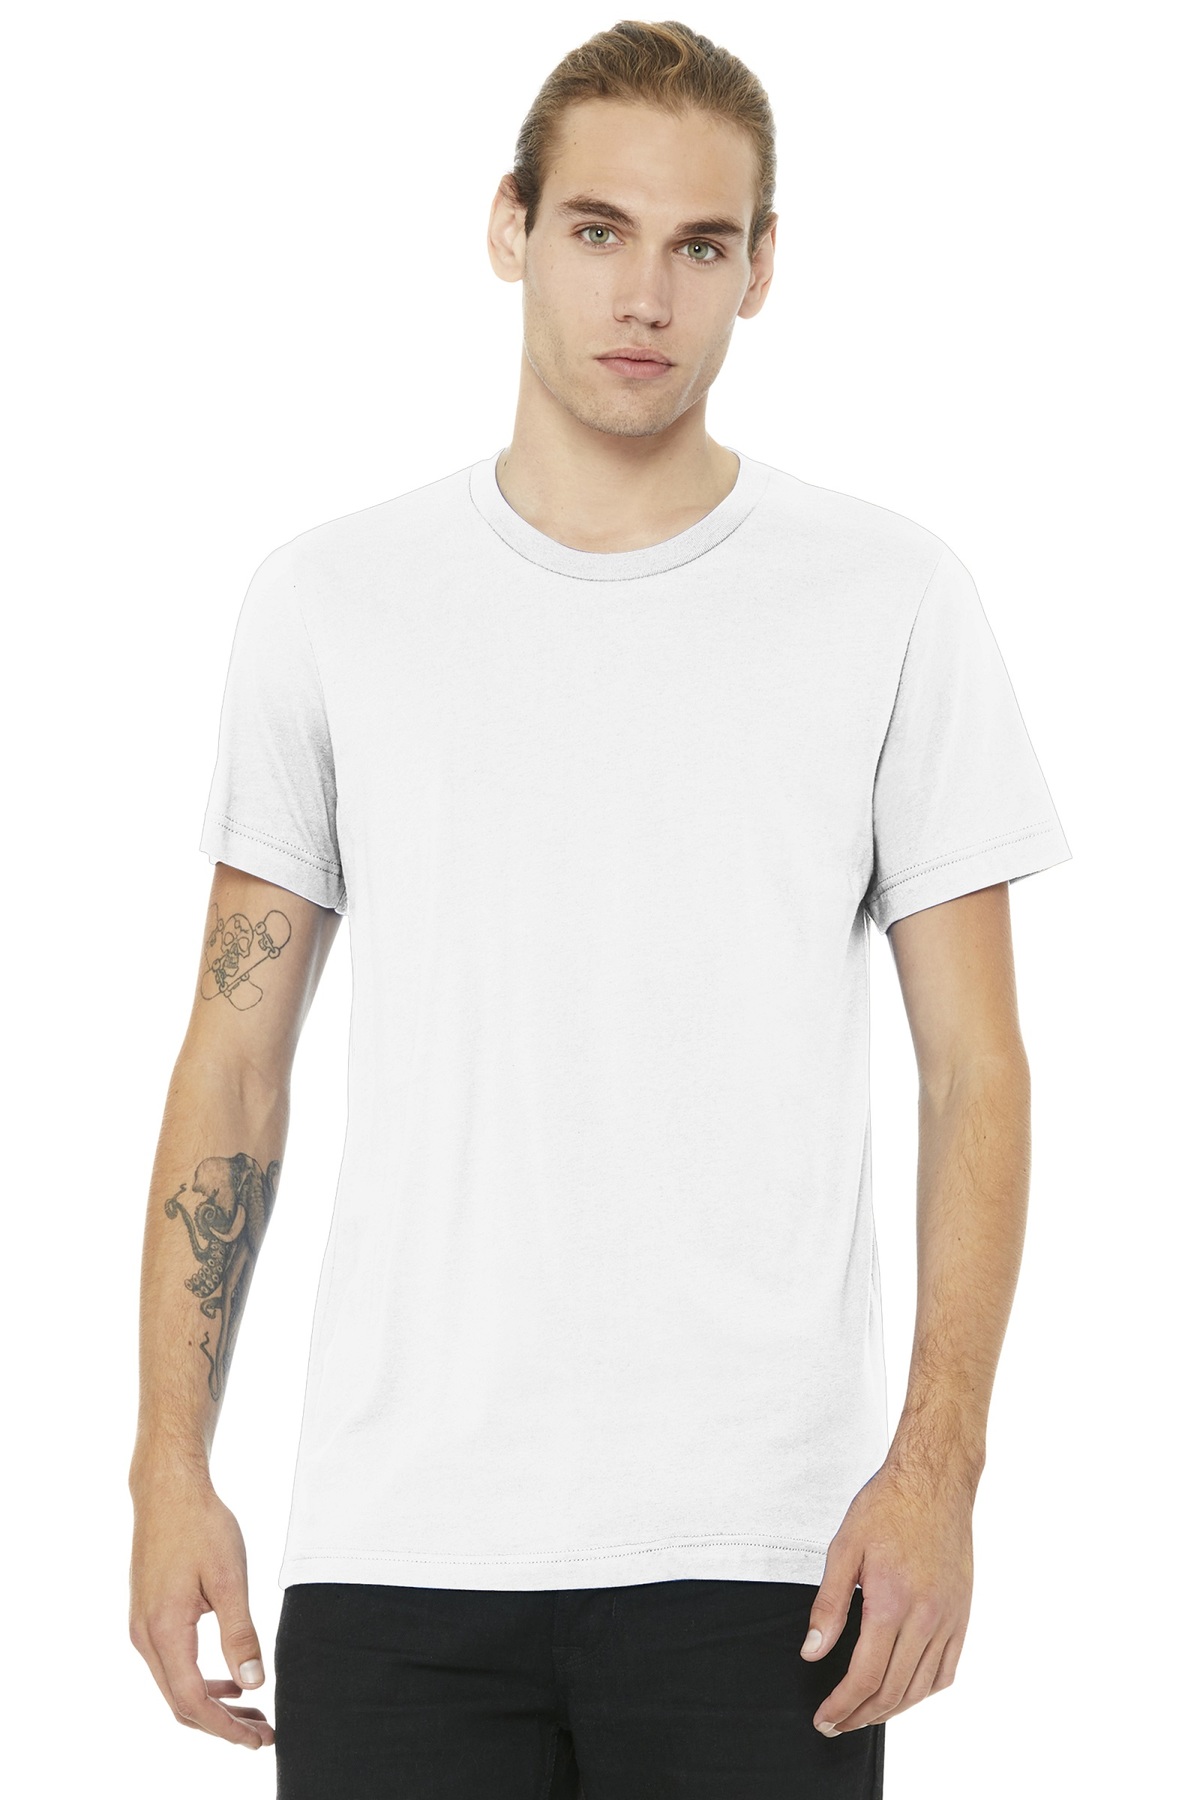 Bella+Canvas Digitally Printed Men's Ringspun Cotton T-Shirt - Queensboro